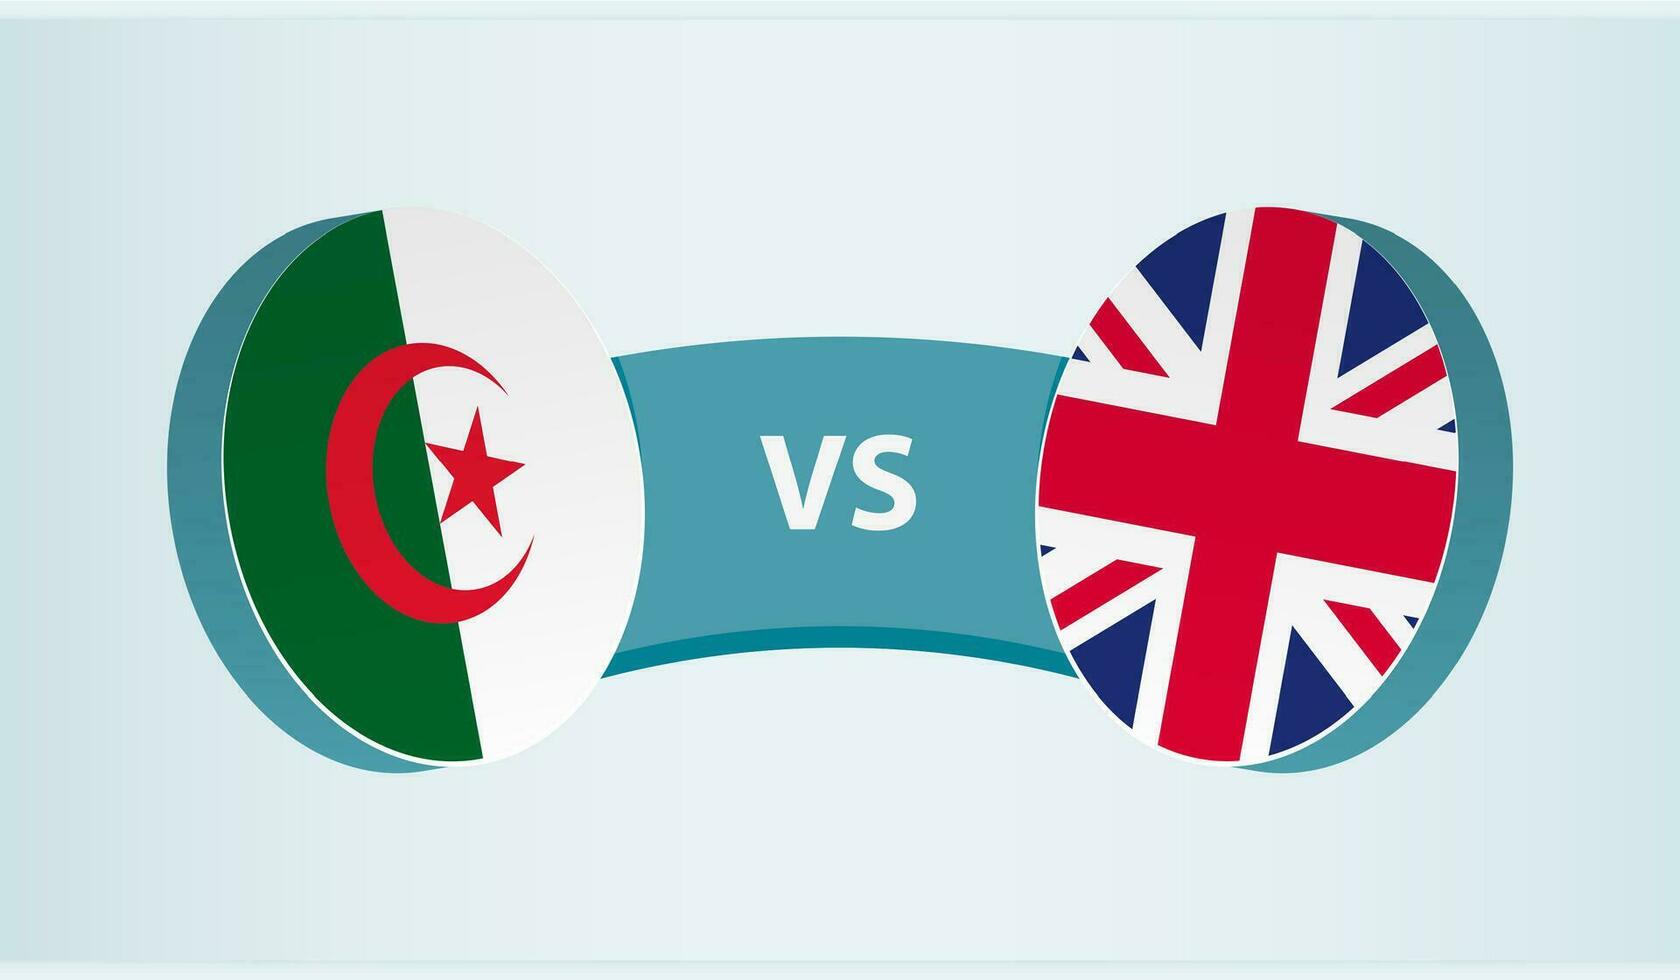 Algeria versus United Kingdom, team sports competition concept. vector